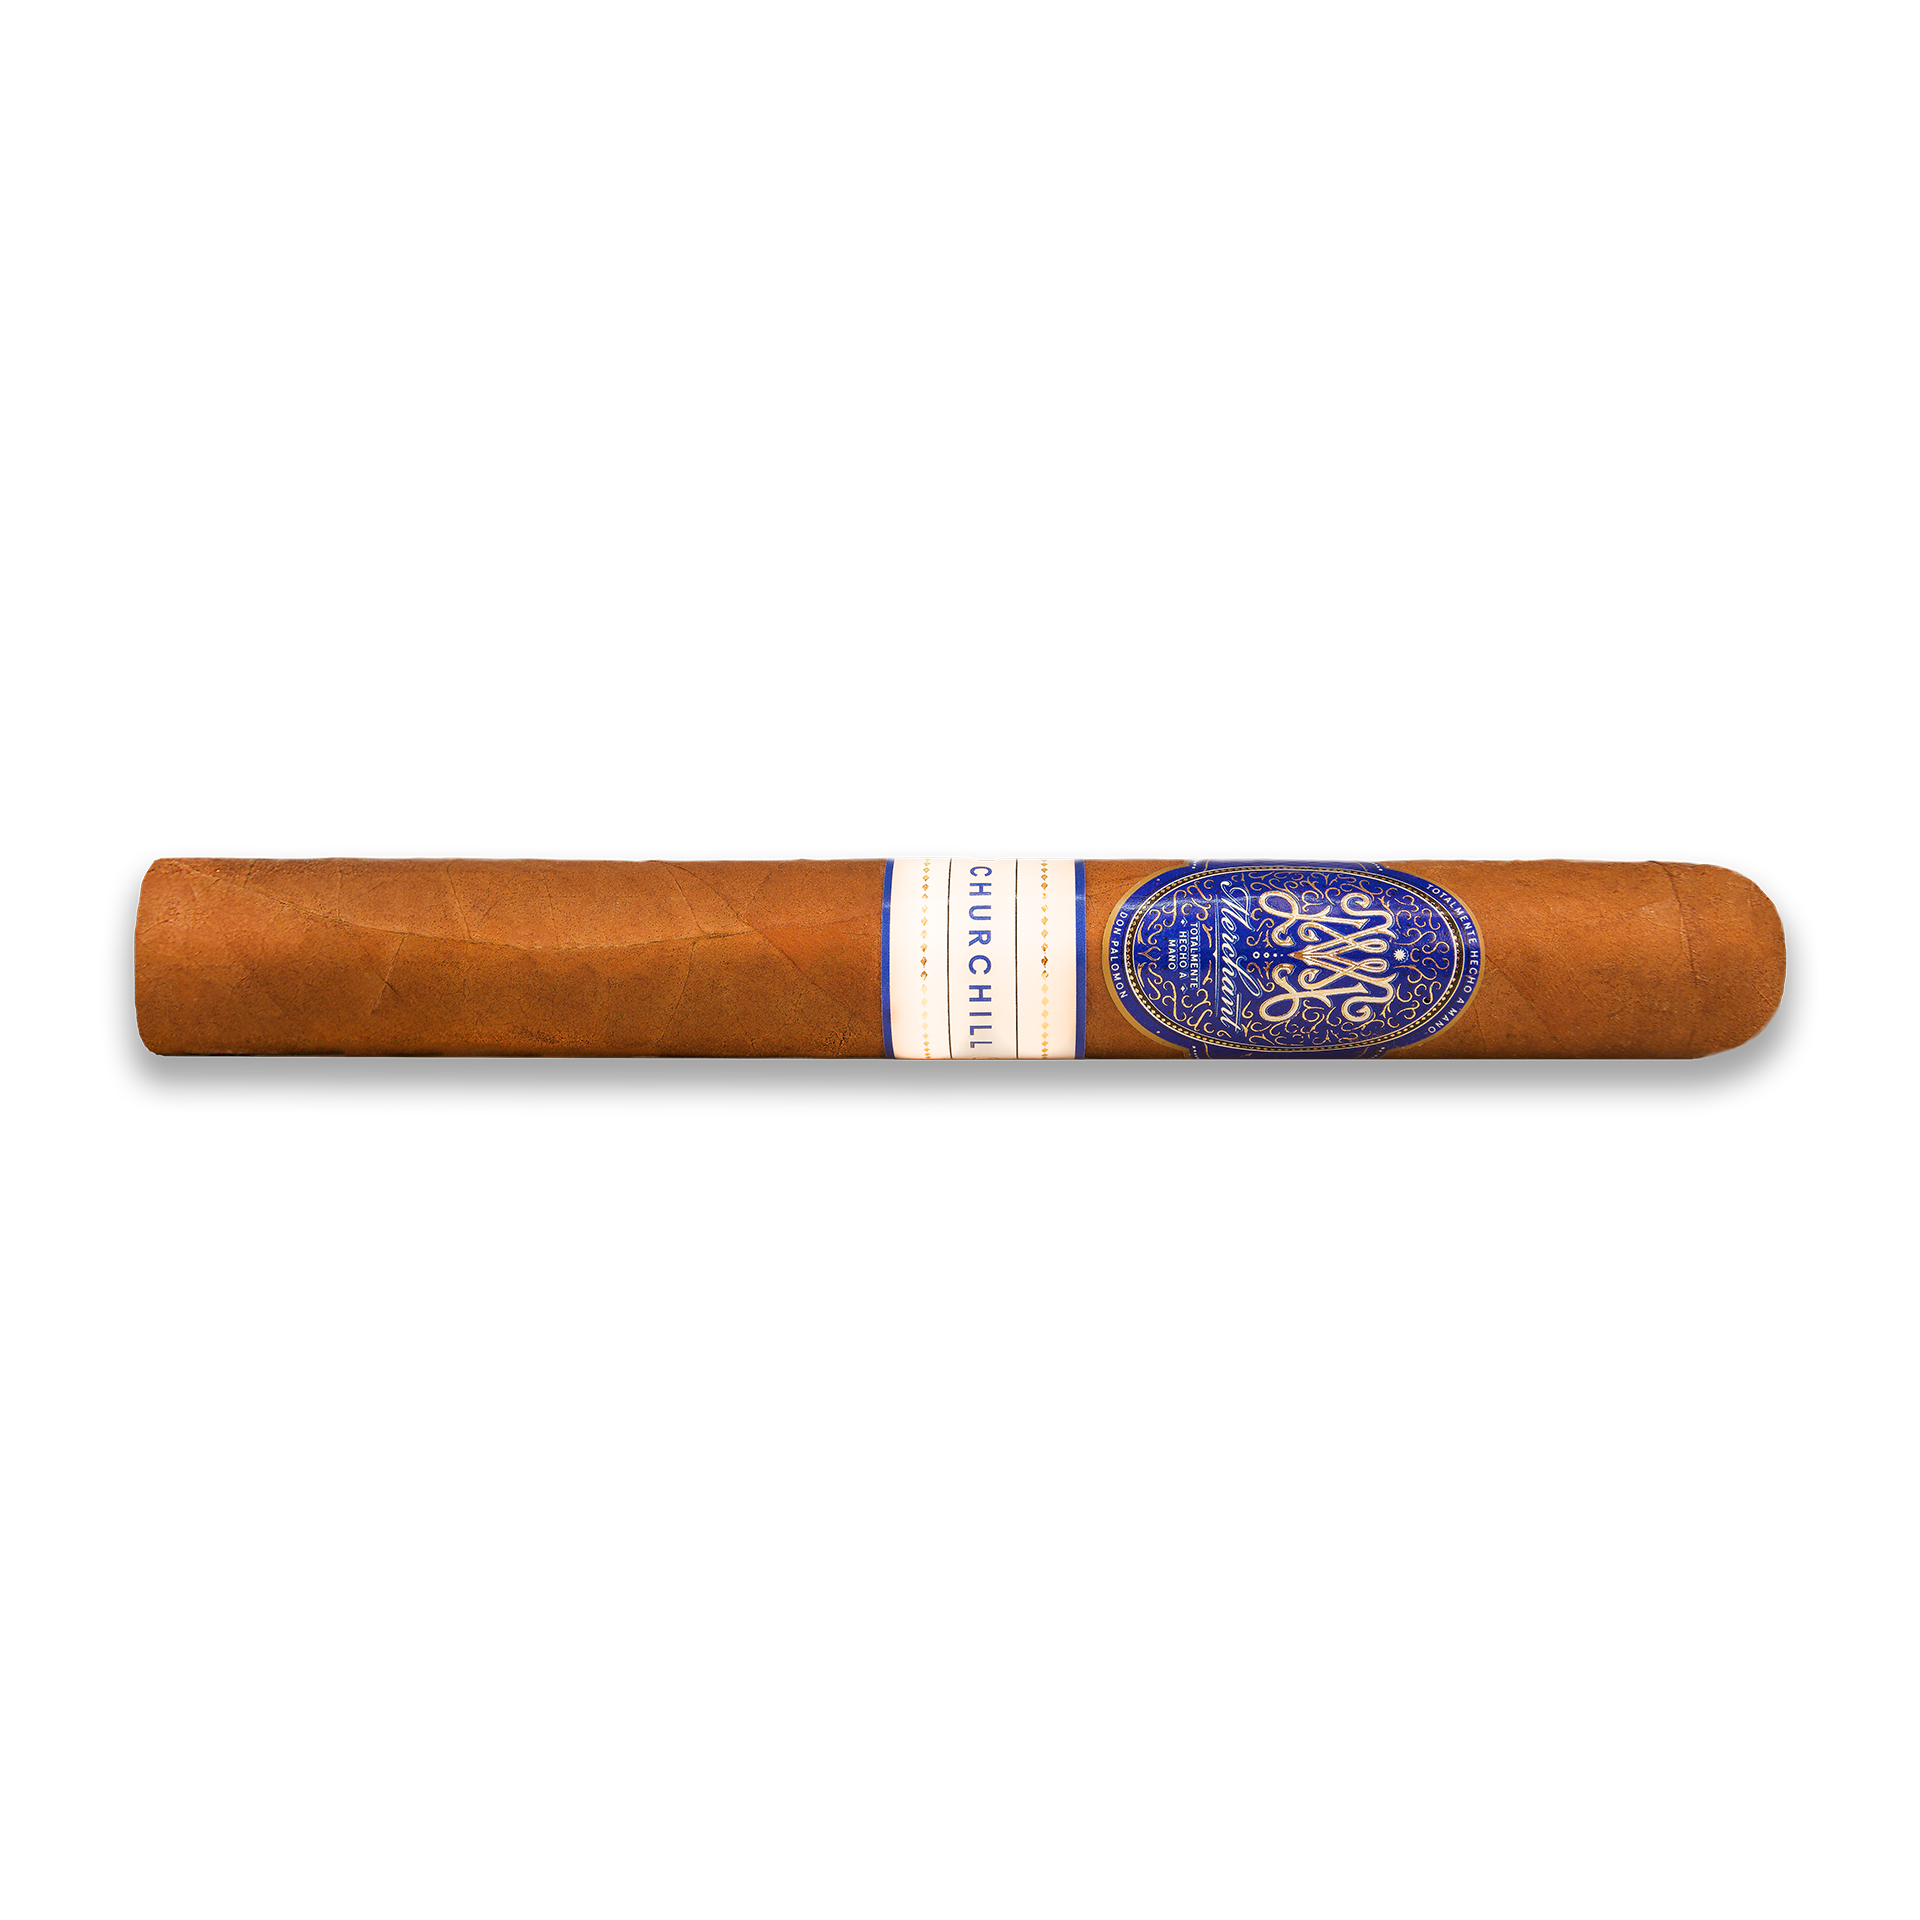 Don Palomon Cigars